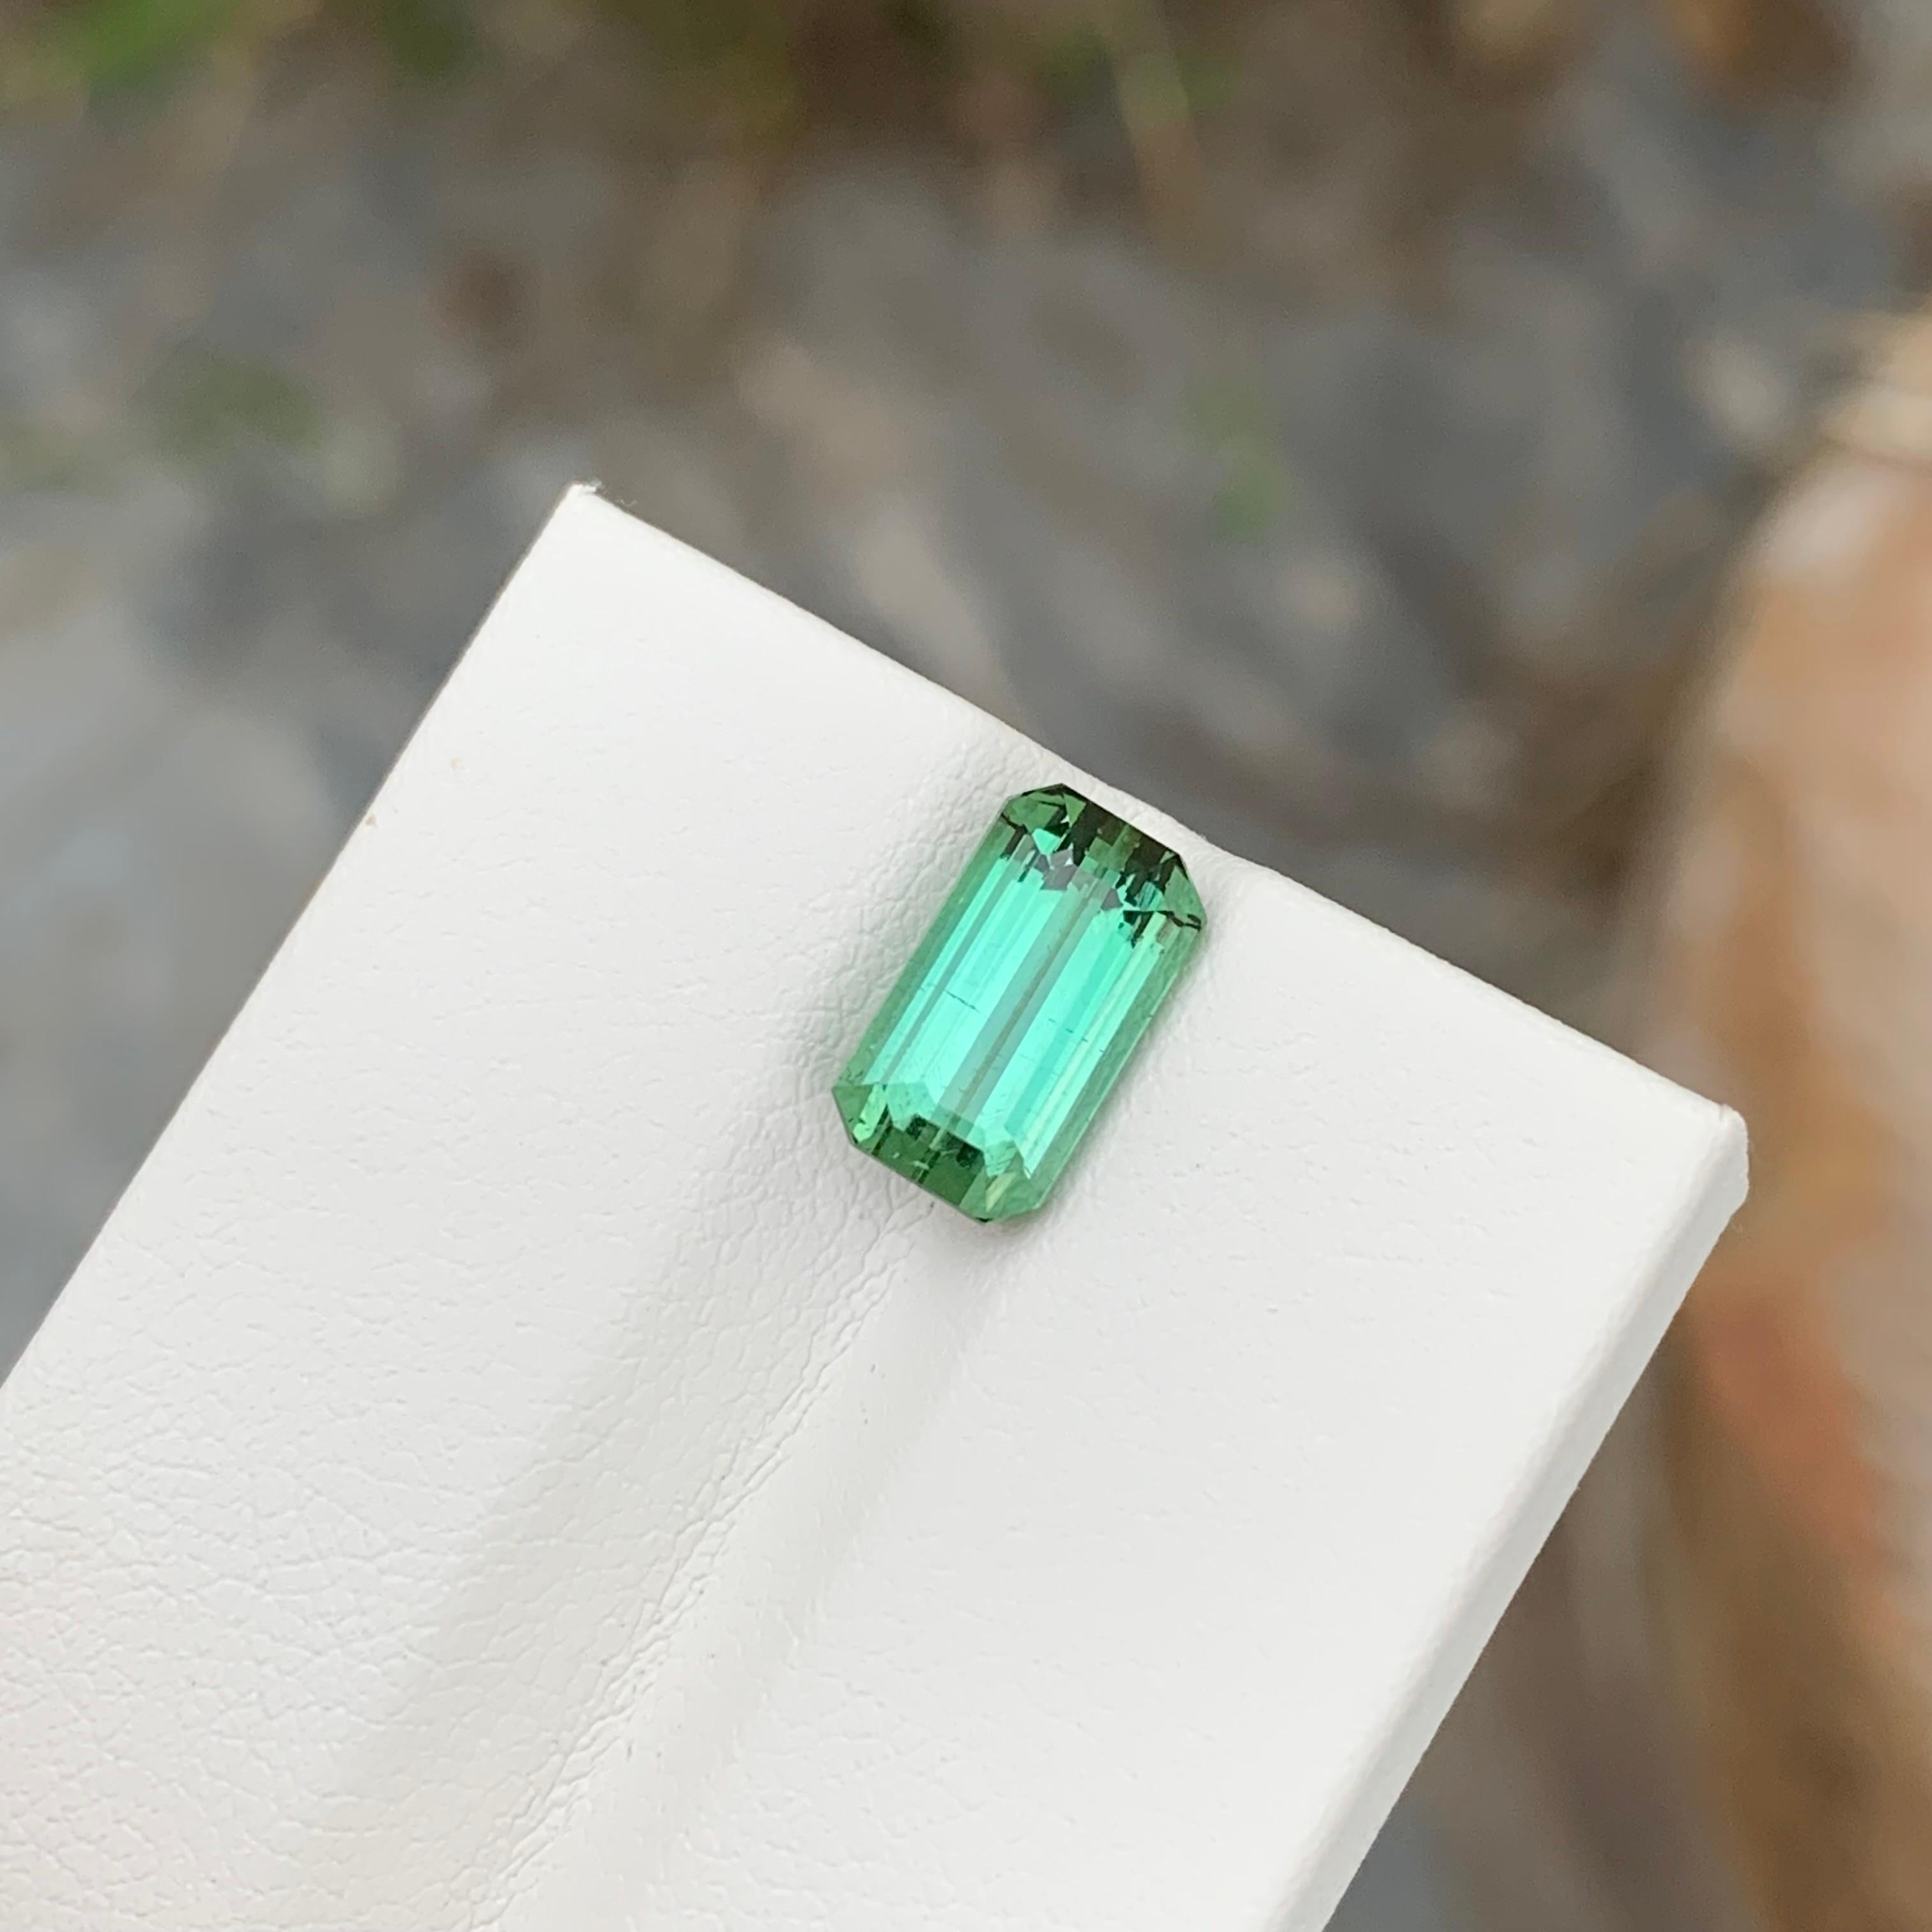 Stunning 3.15 Carats Natural Loose Mint Green Tourmaline Emerald Shape For Sale 5